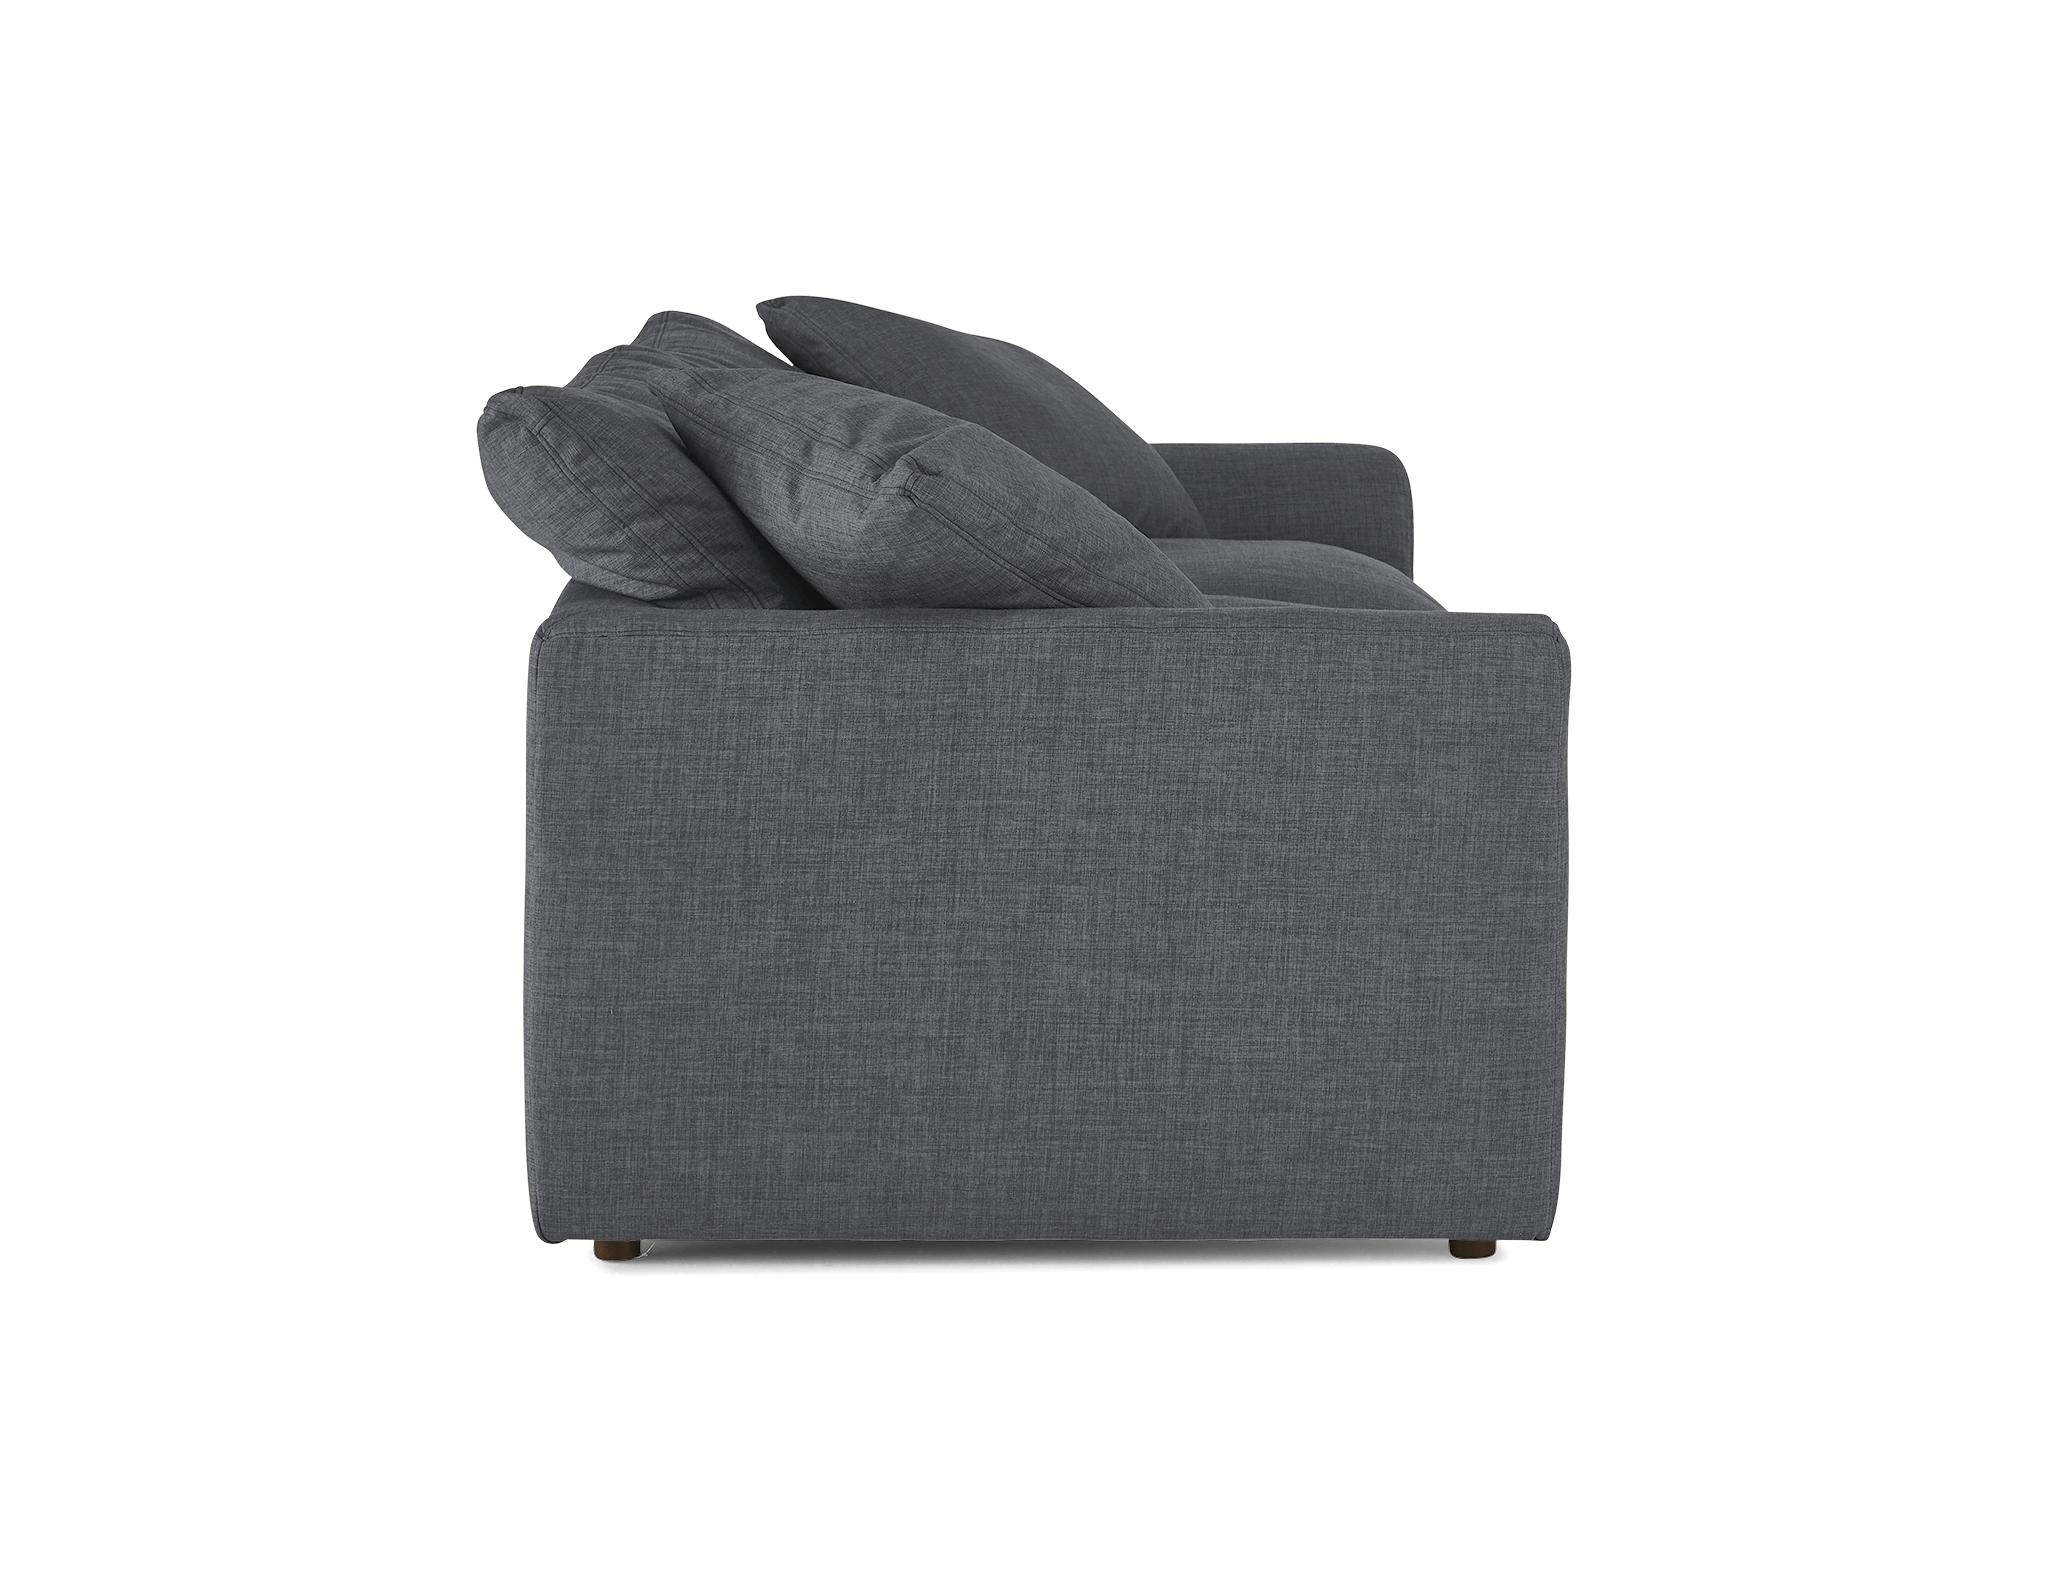 Gray Bryant Mid Century Modern Sofa - Essence Ash - Image 2